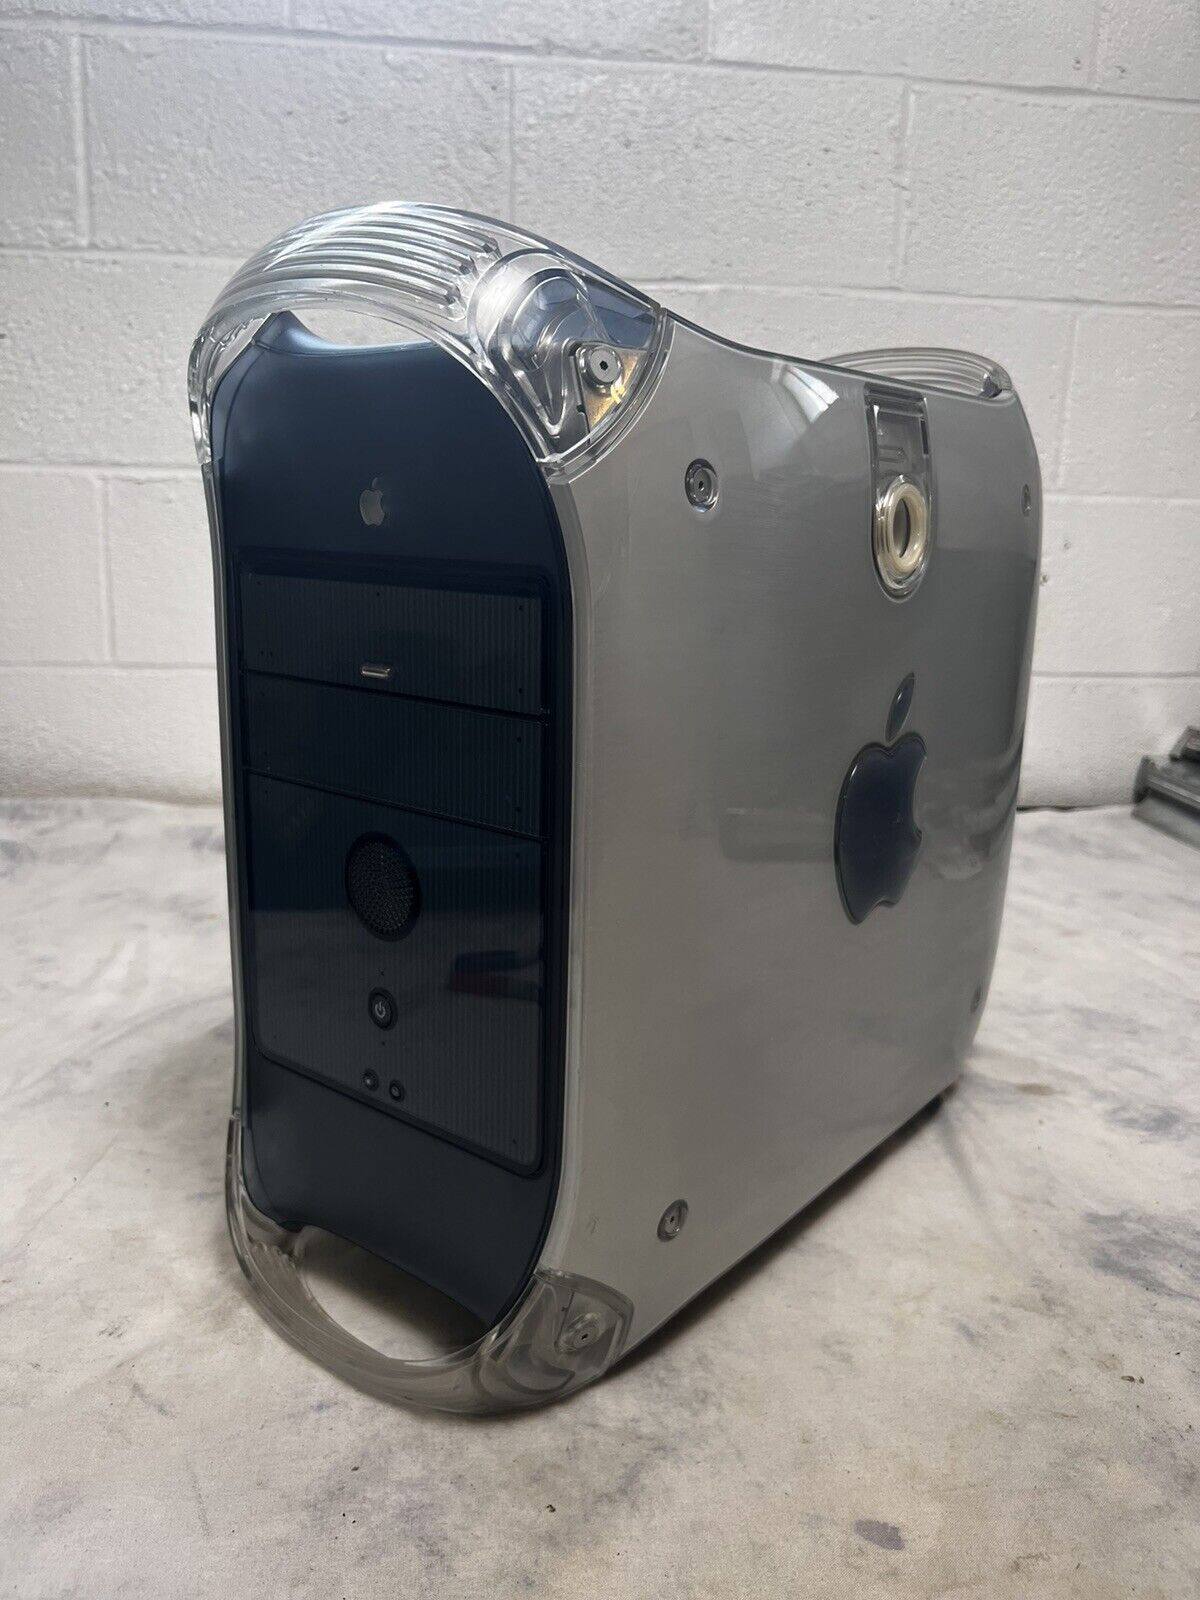 Apple M5183 PowerMac G4 Graphite (533MHz - 128MB RAM)